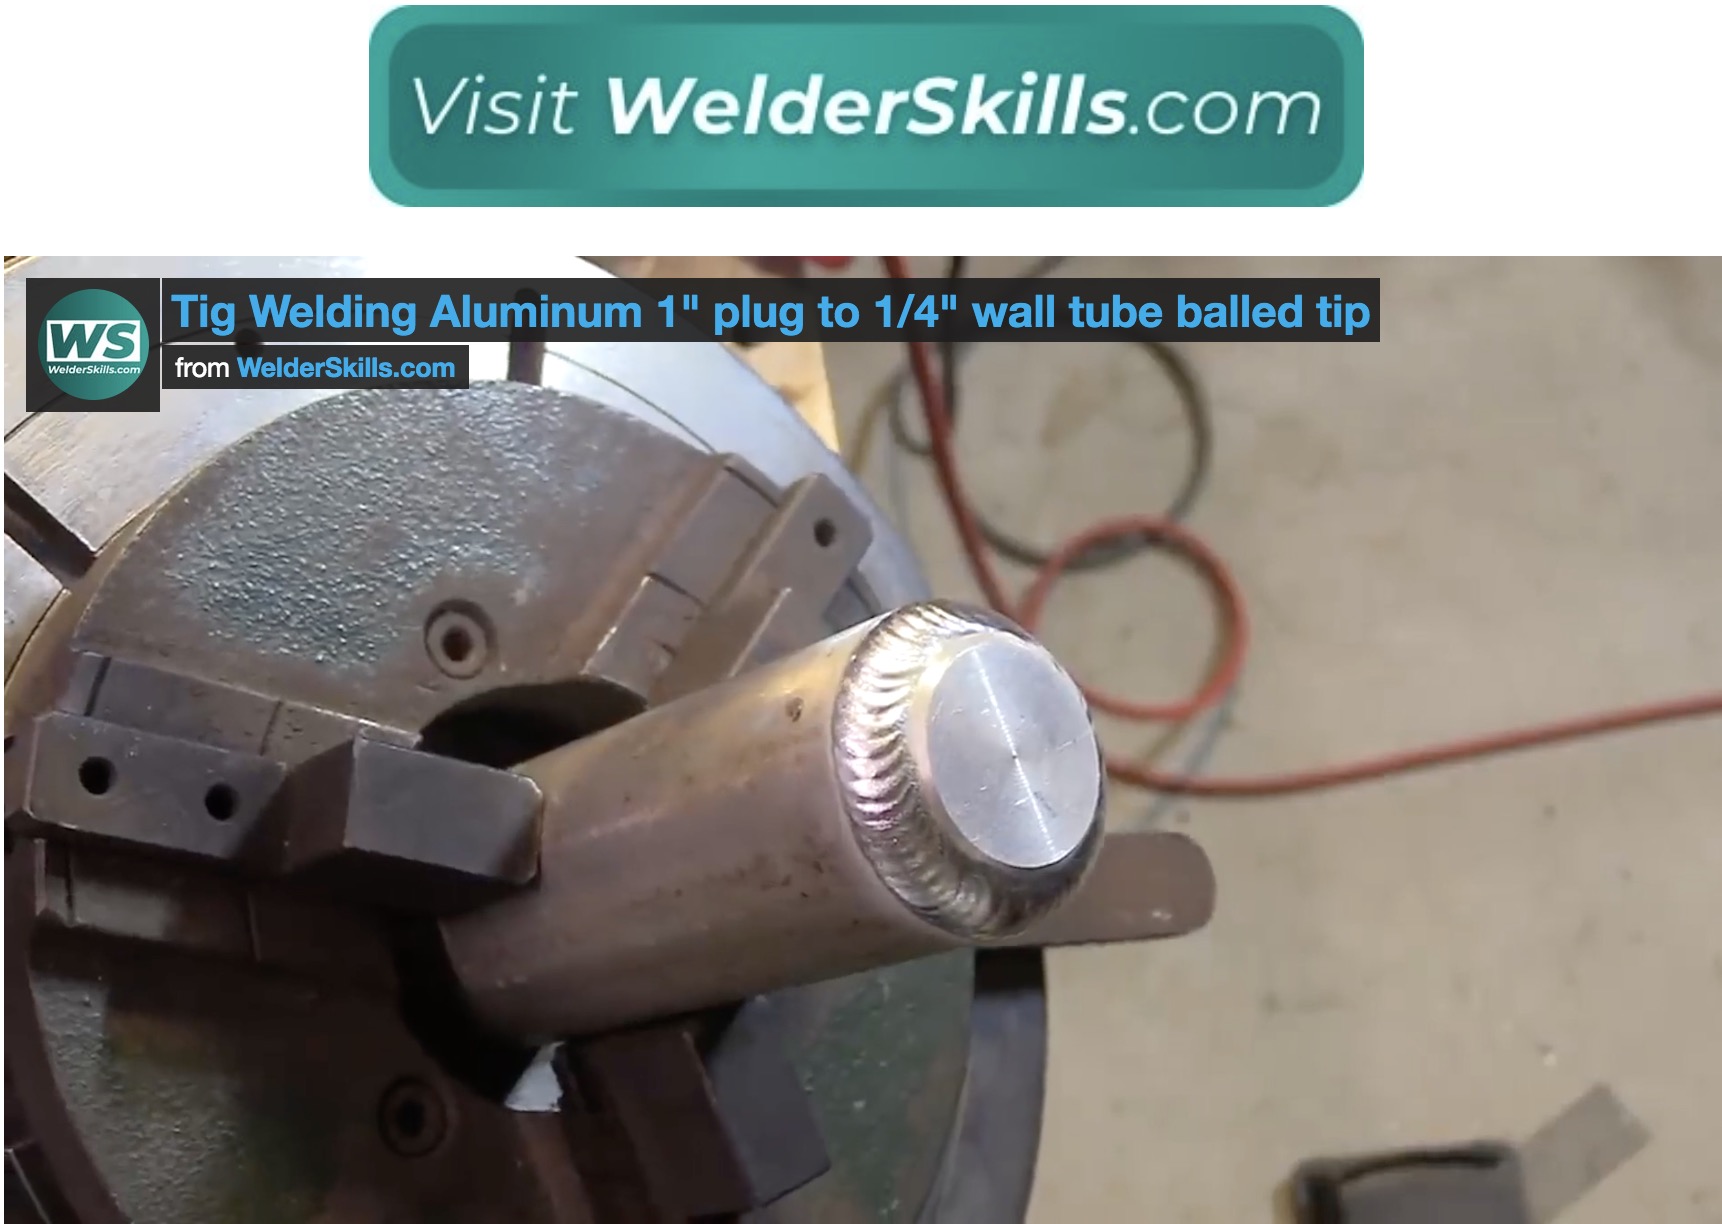 tig-welding-aluminum-balled-tip-turntable